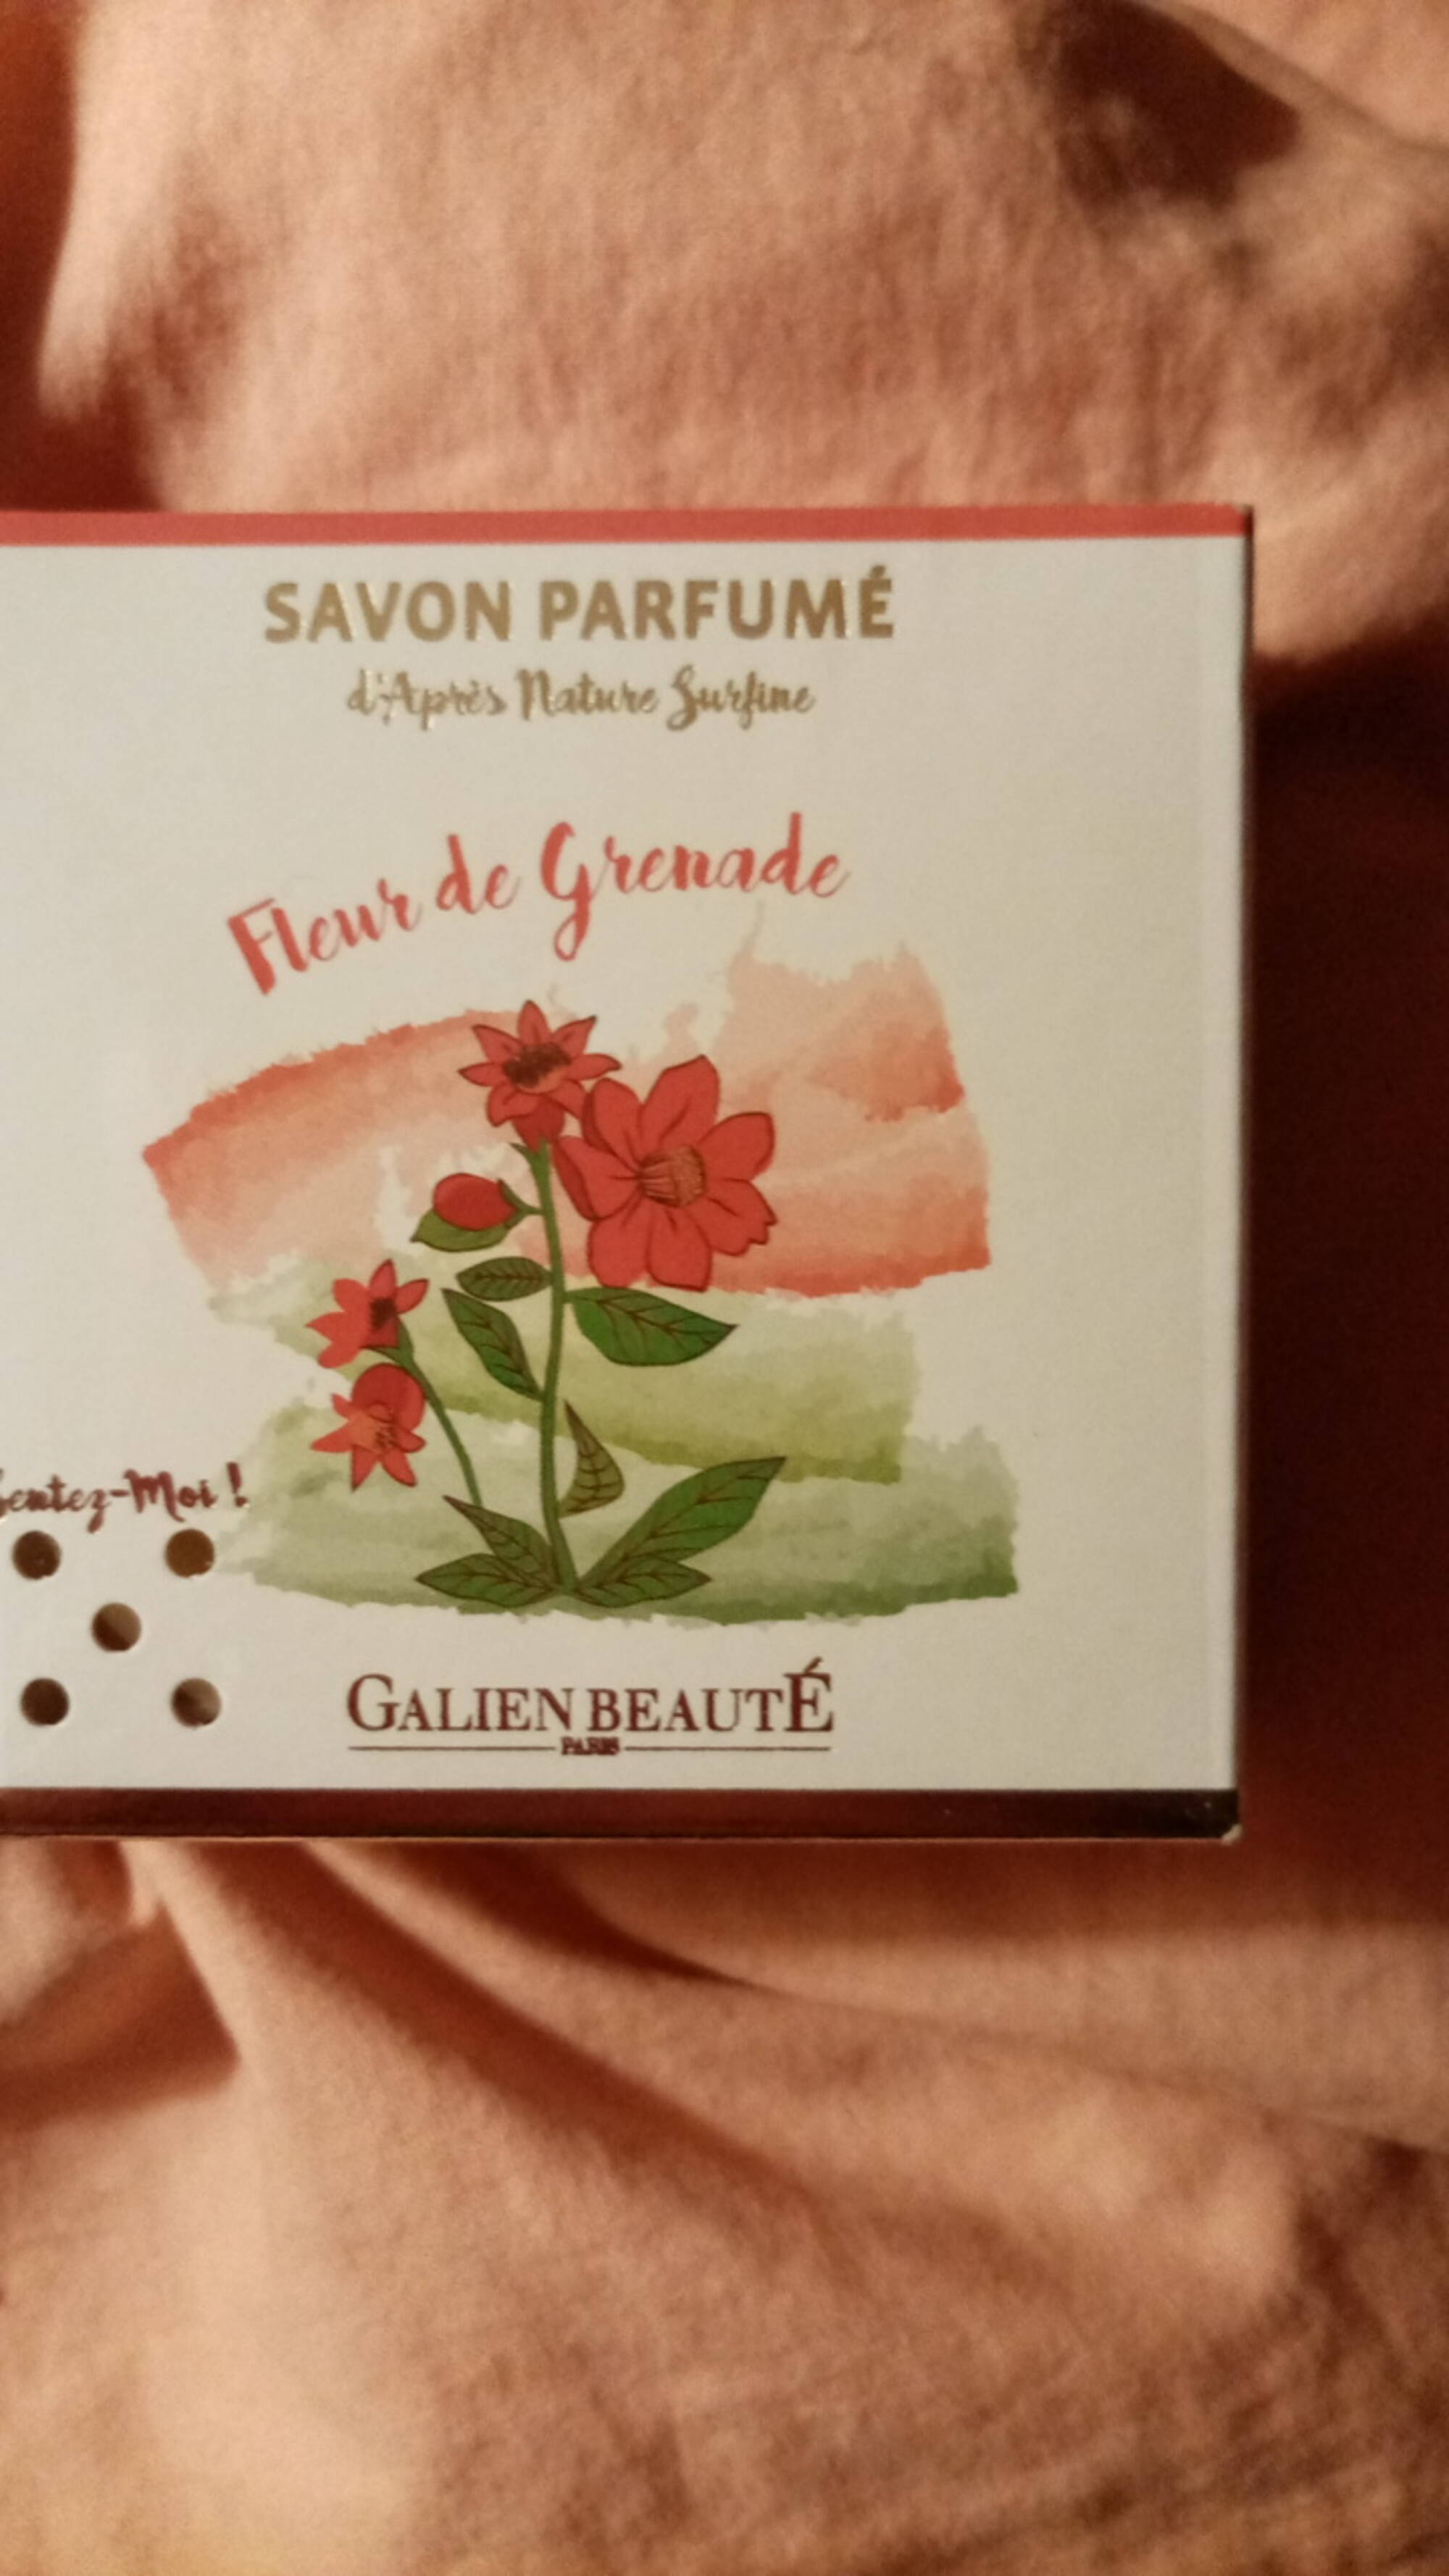 GALIEN BEAUTÉ - Fleur de grenade - Savon parfumé